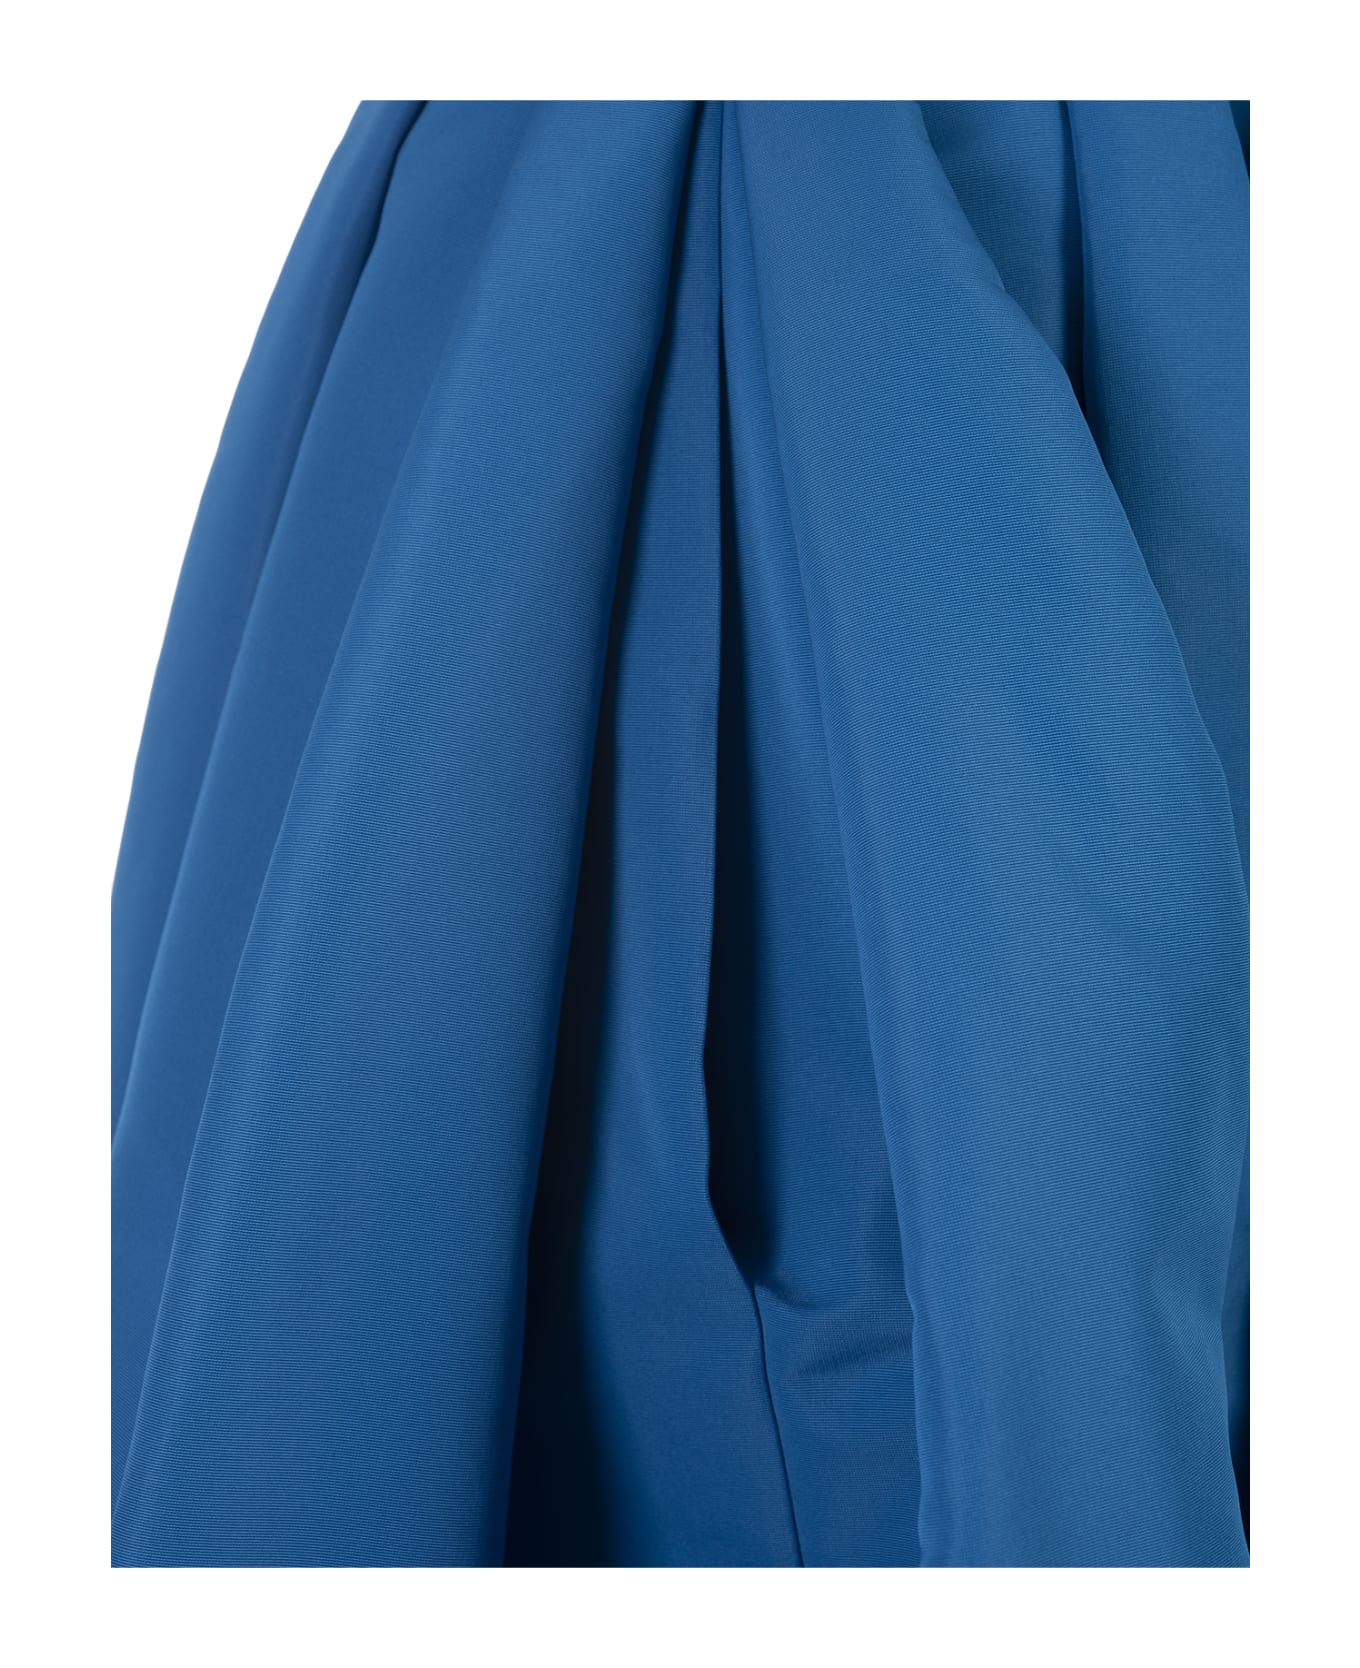 Alexander McQueen Lapis Lazuli Blue Curled Midi Skirt - Blue スカート